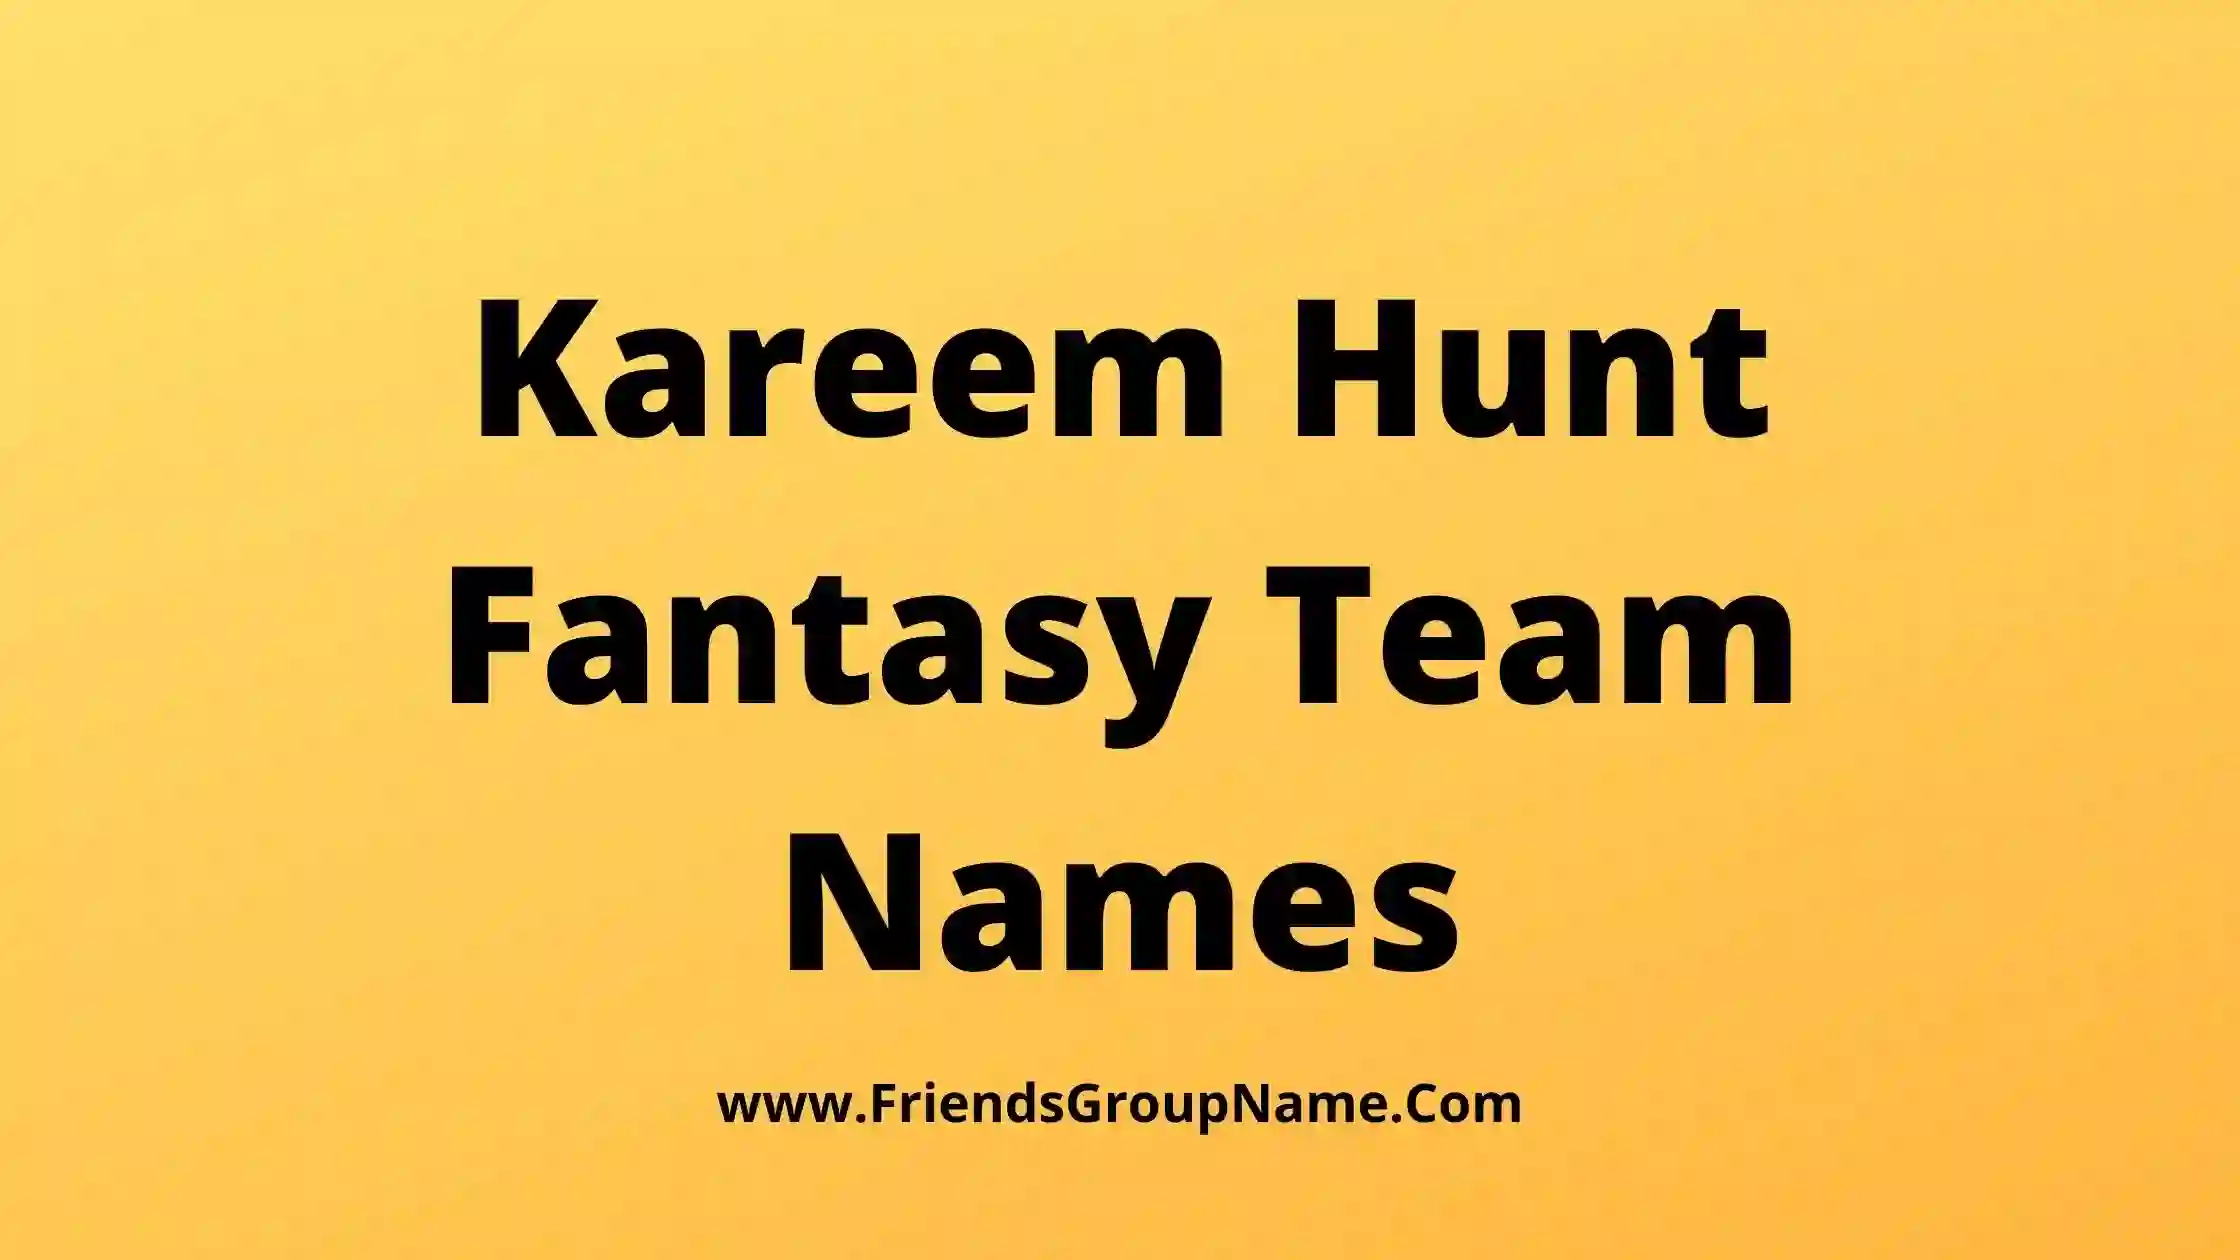 Kareem Hunt Fantasy Team Names